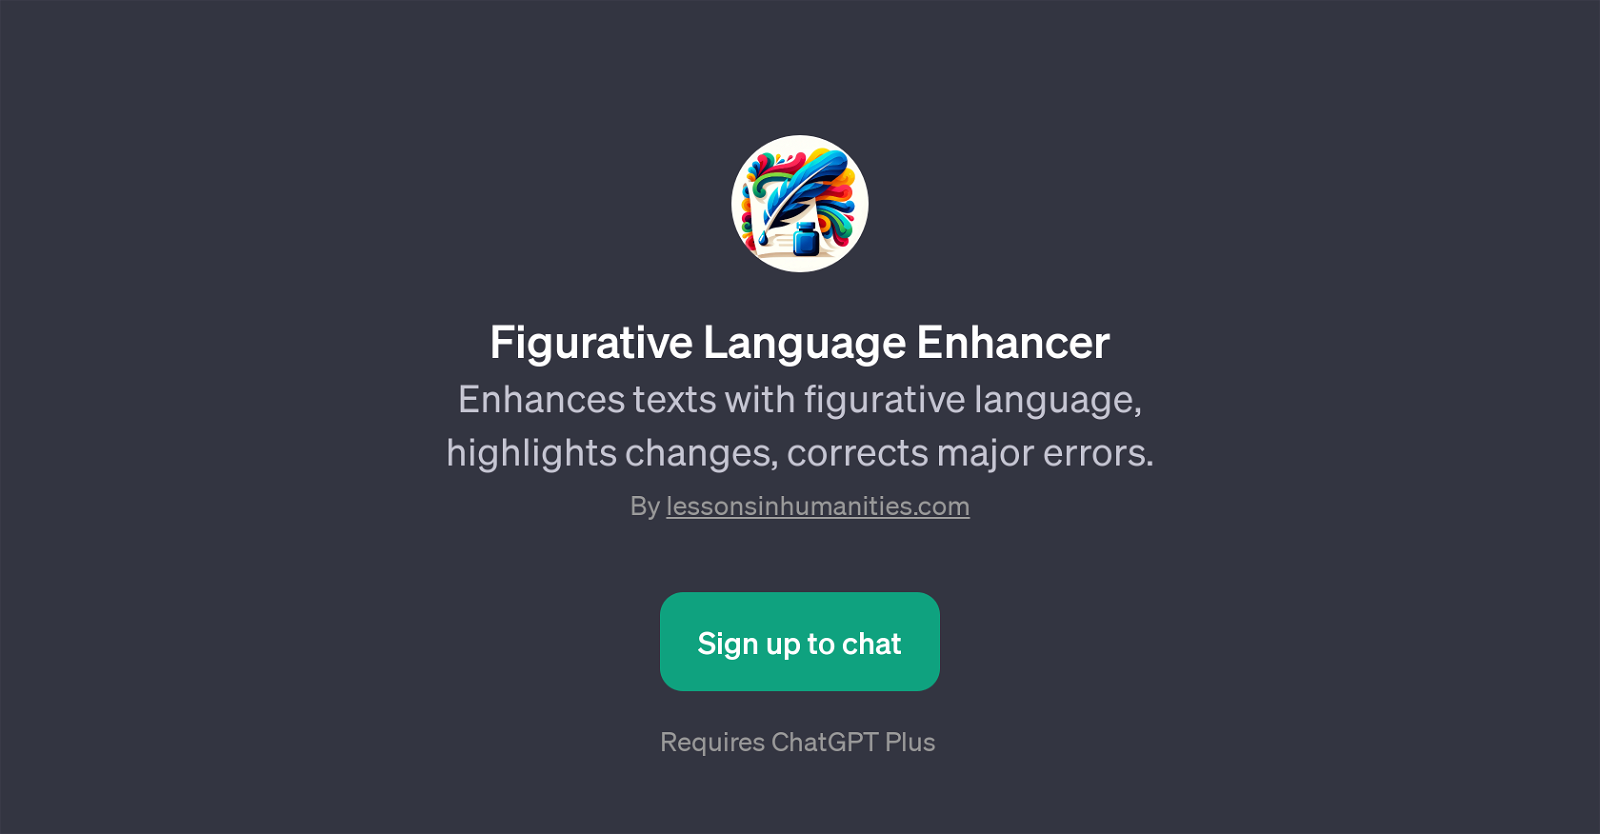 Figurative Language Enhancer website